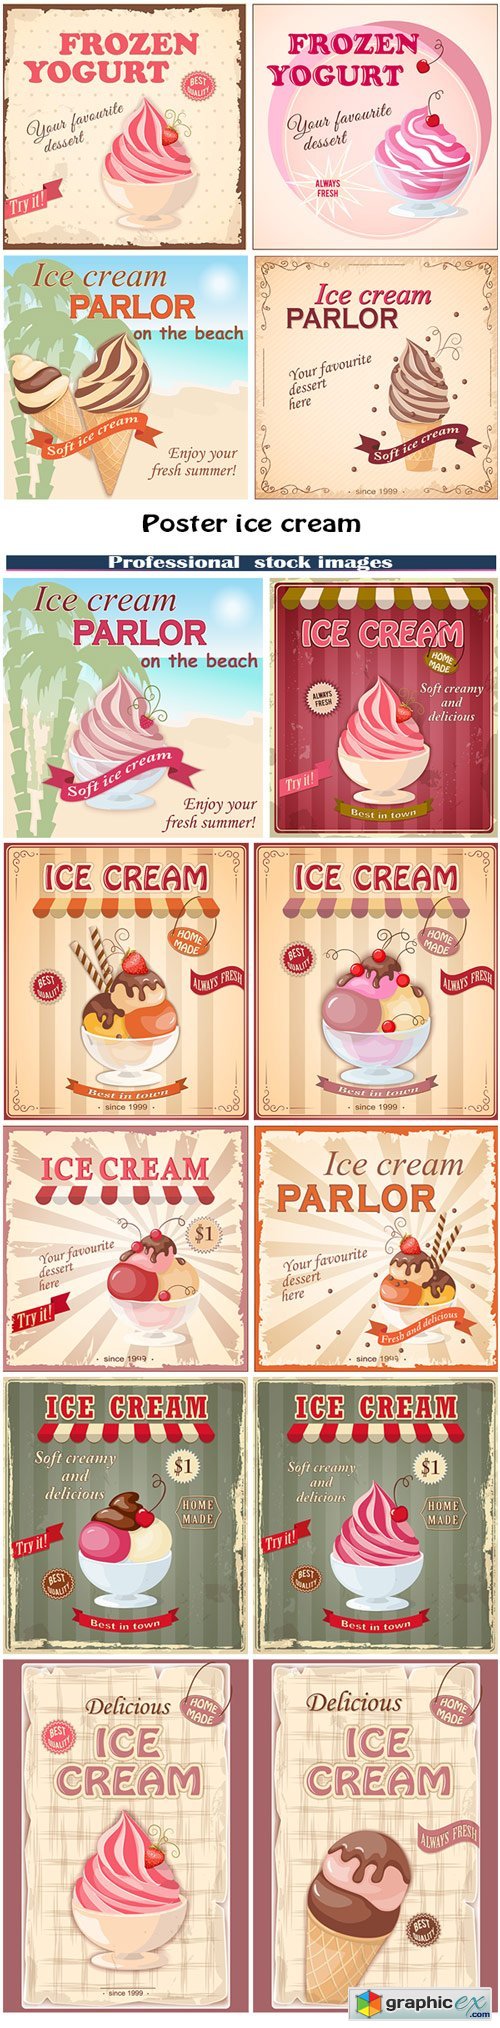 Poster ice cream